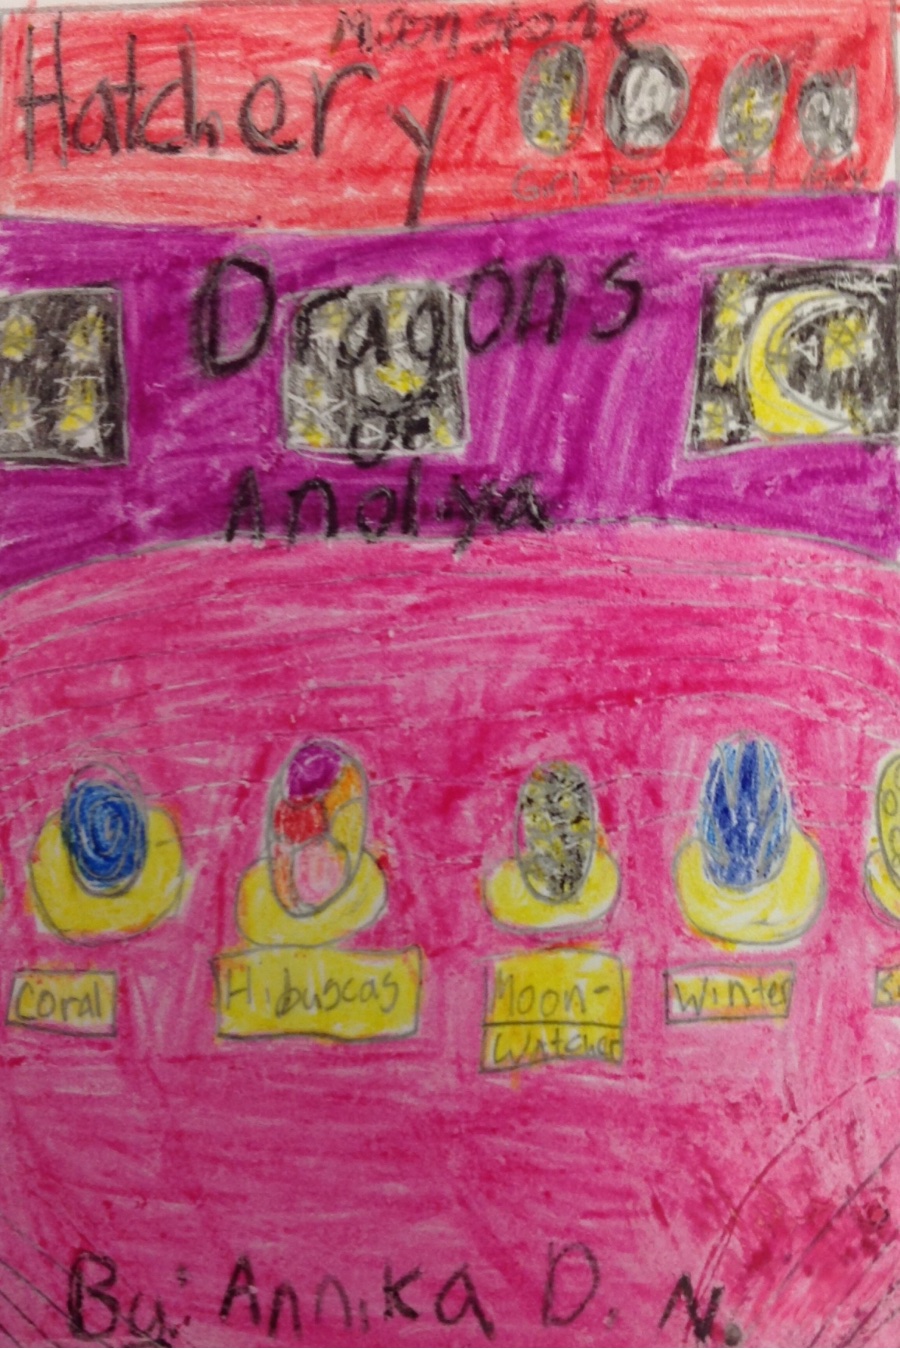 Dragons of Anoliya by Annika N